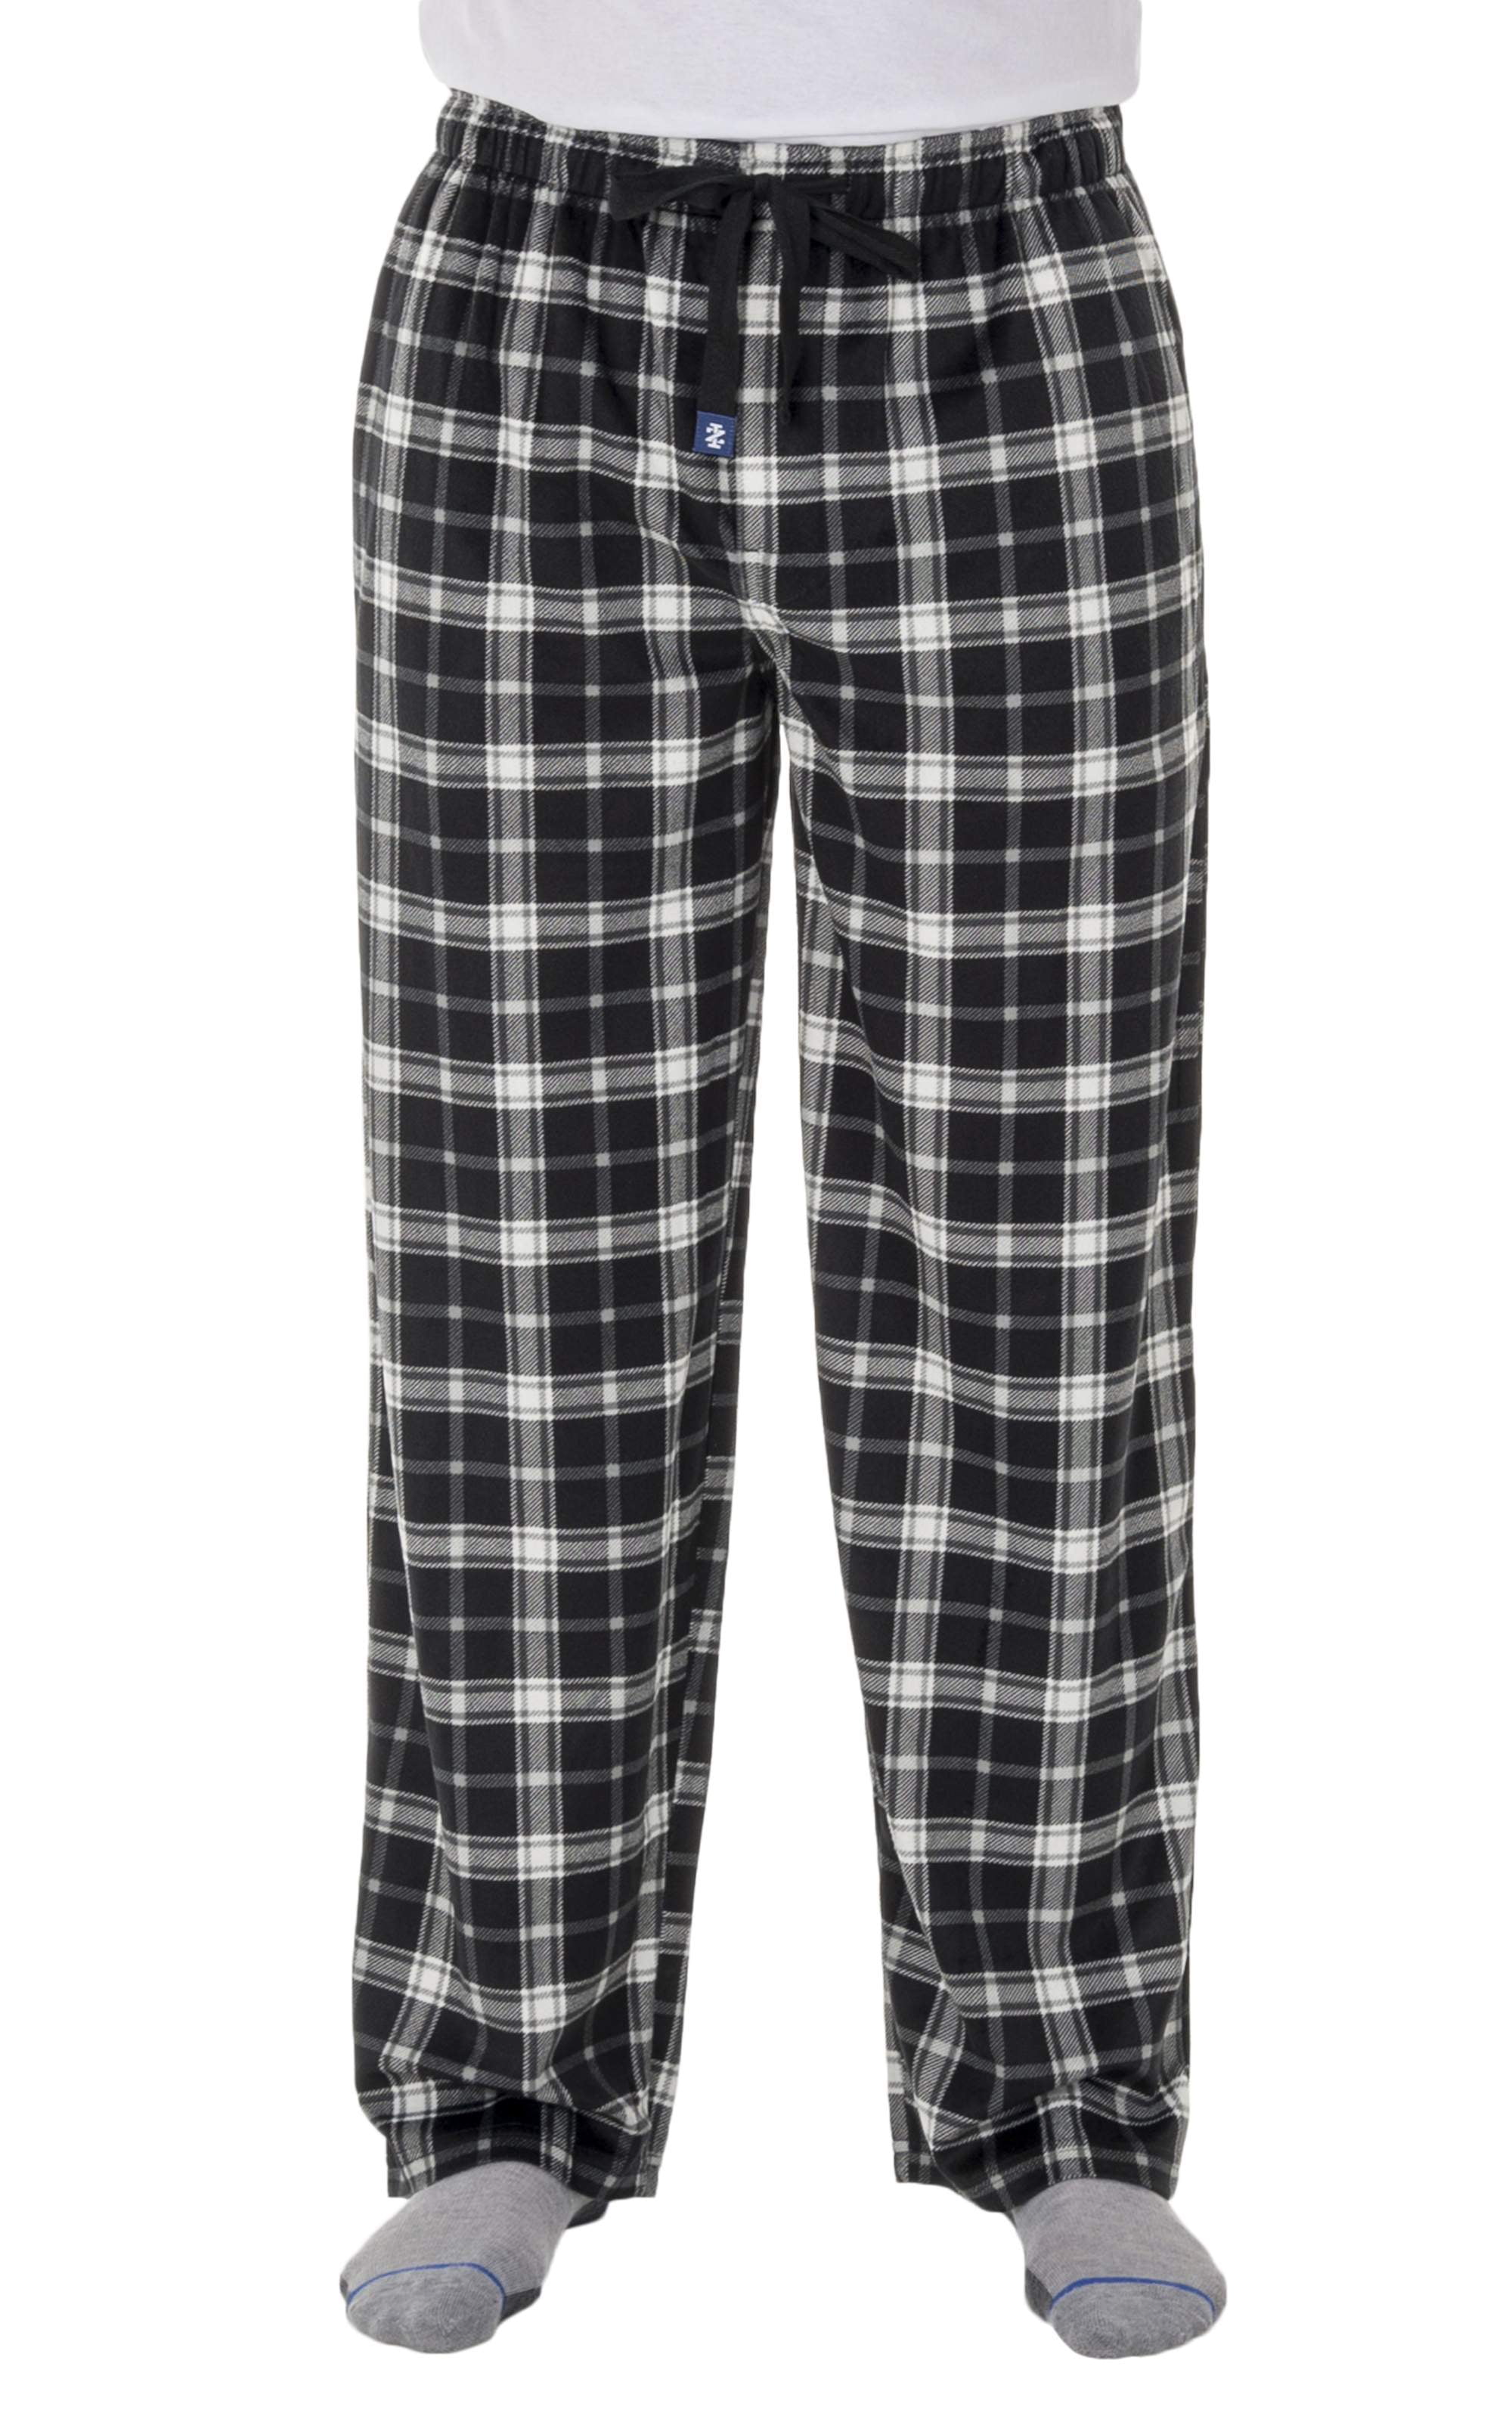 Izod Comfort Soft Sleep Pants, Pajamas & Robes